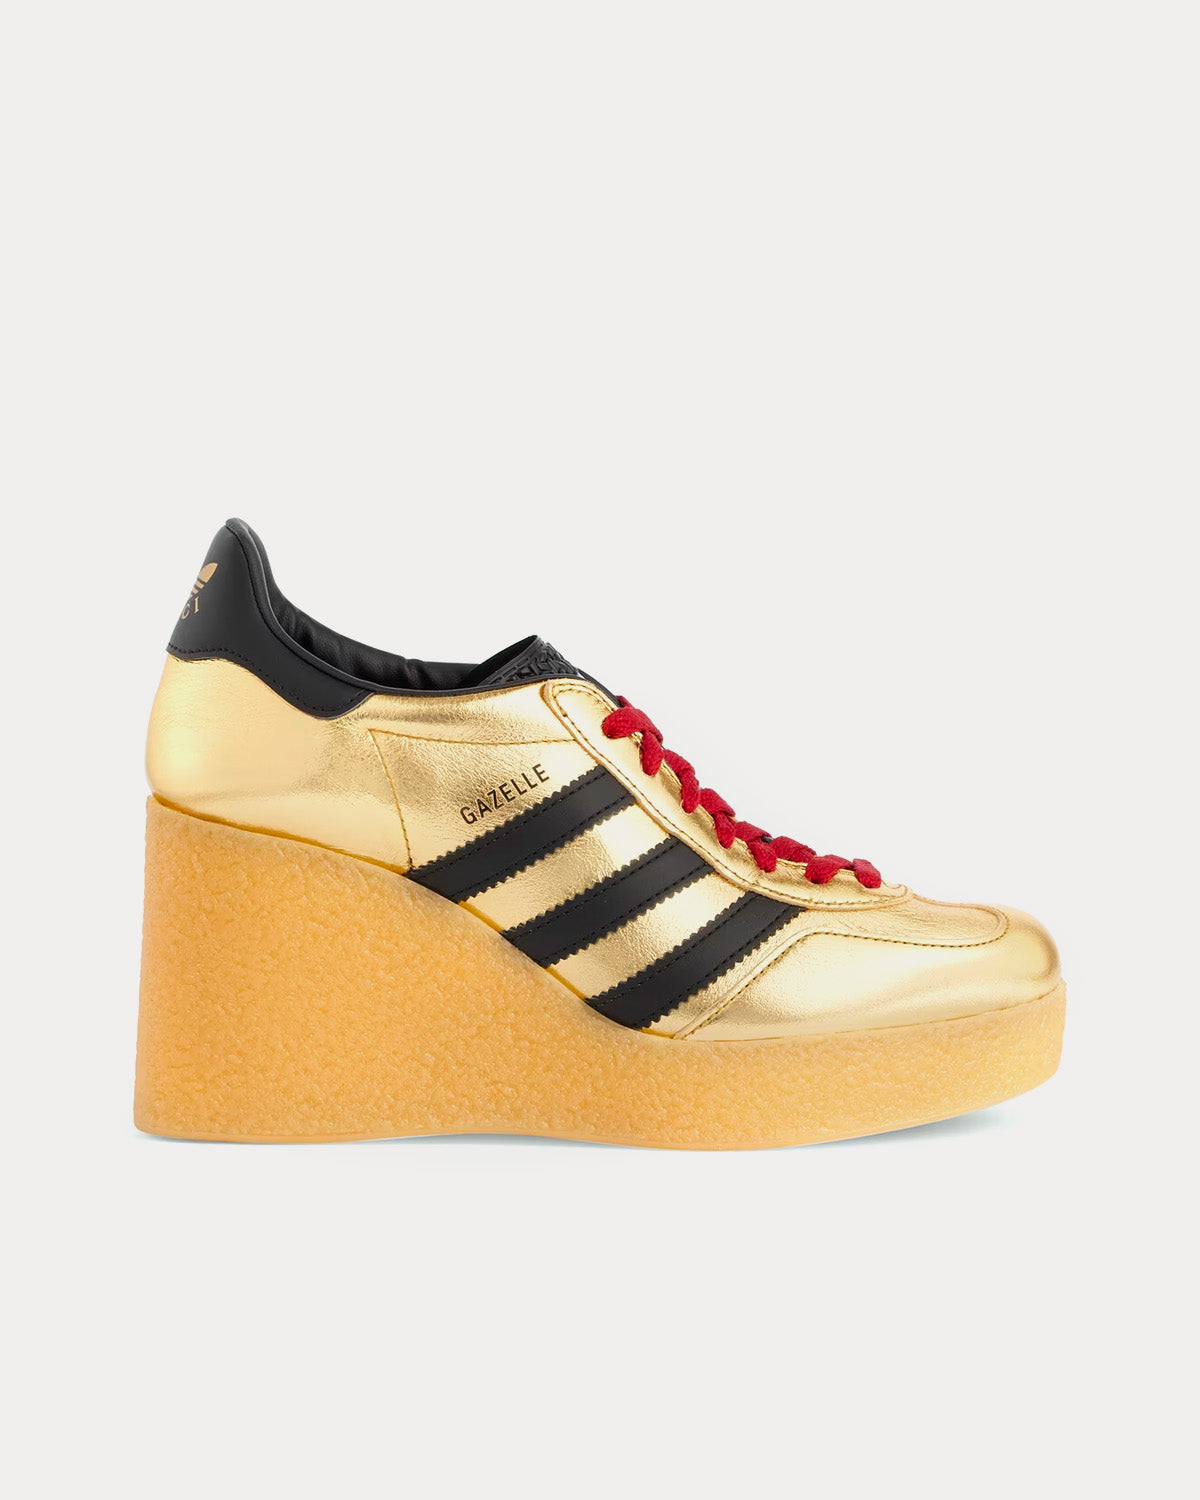 Adidas x Gucci - Gazelle Wedge Metallic Gold Low Top Sneakers